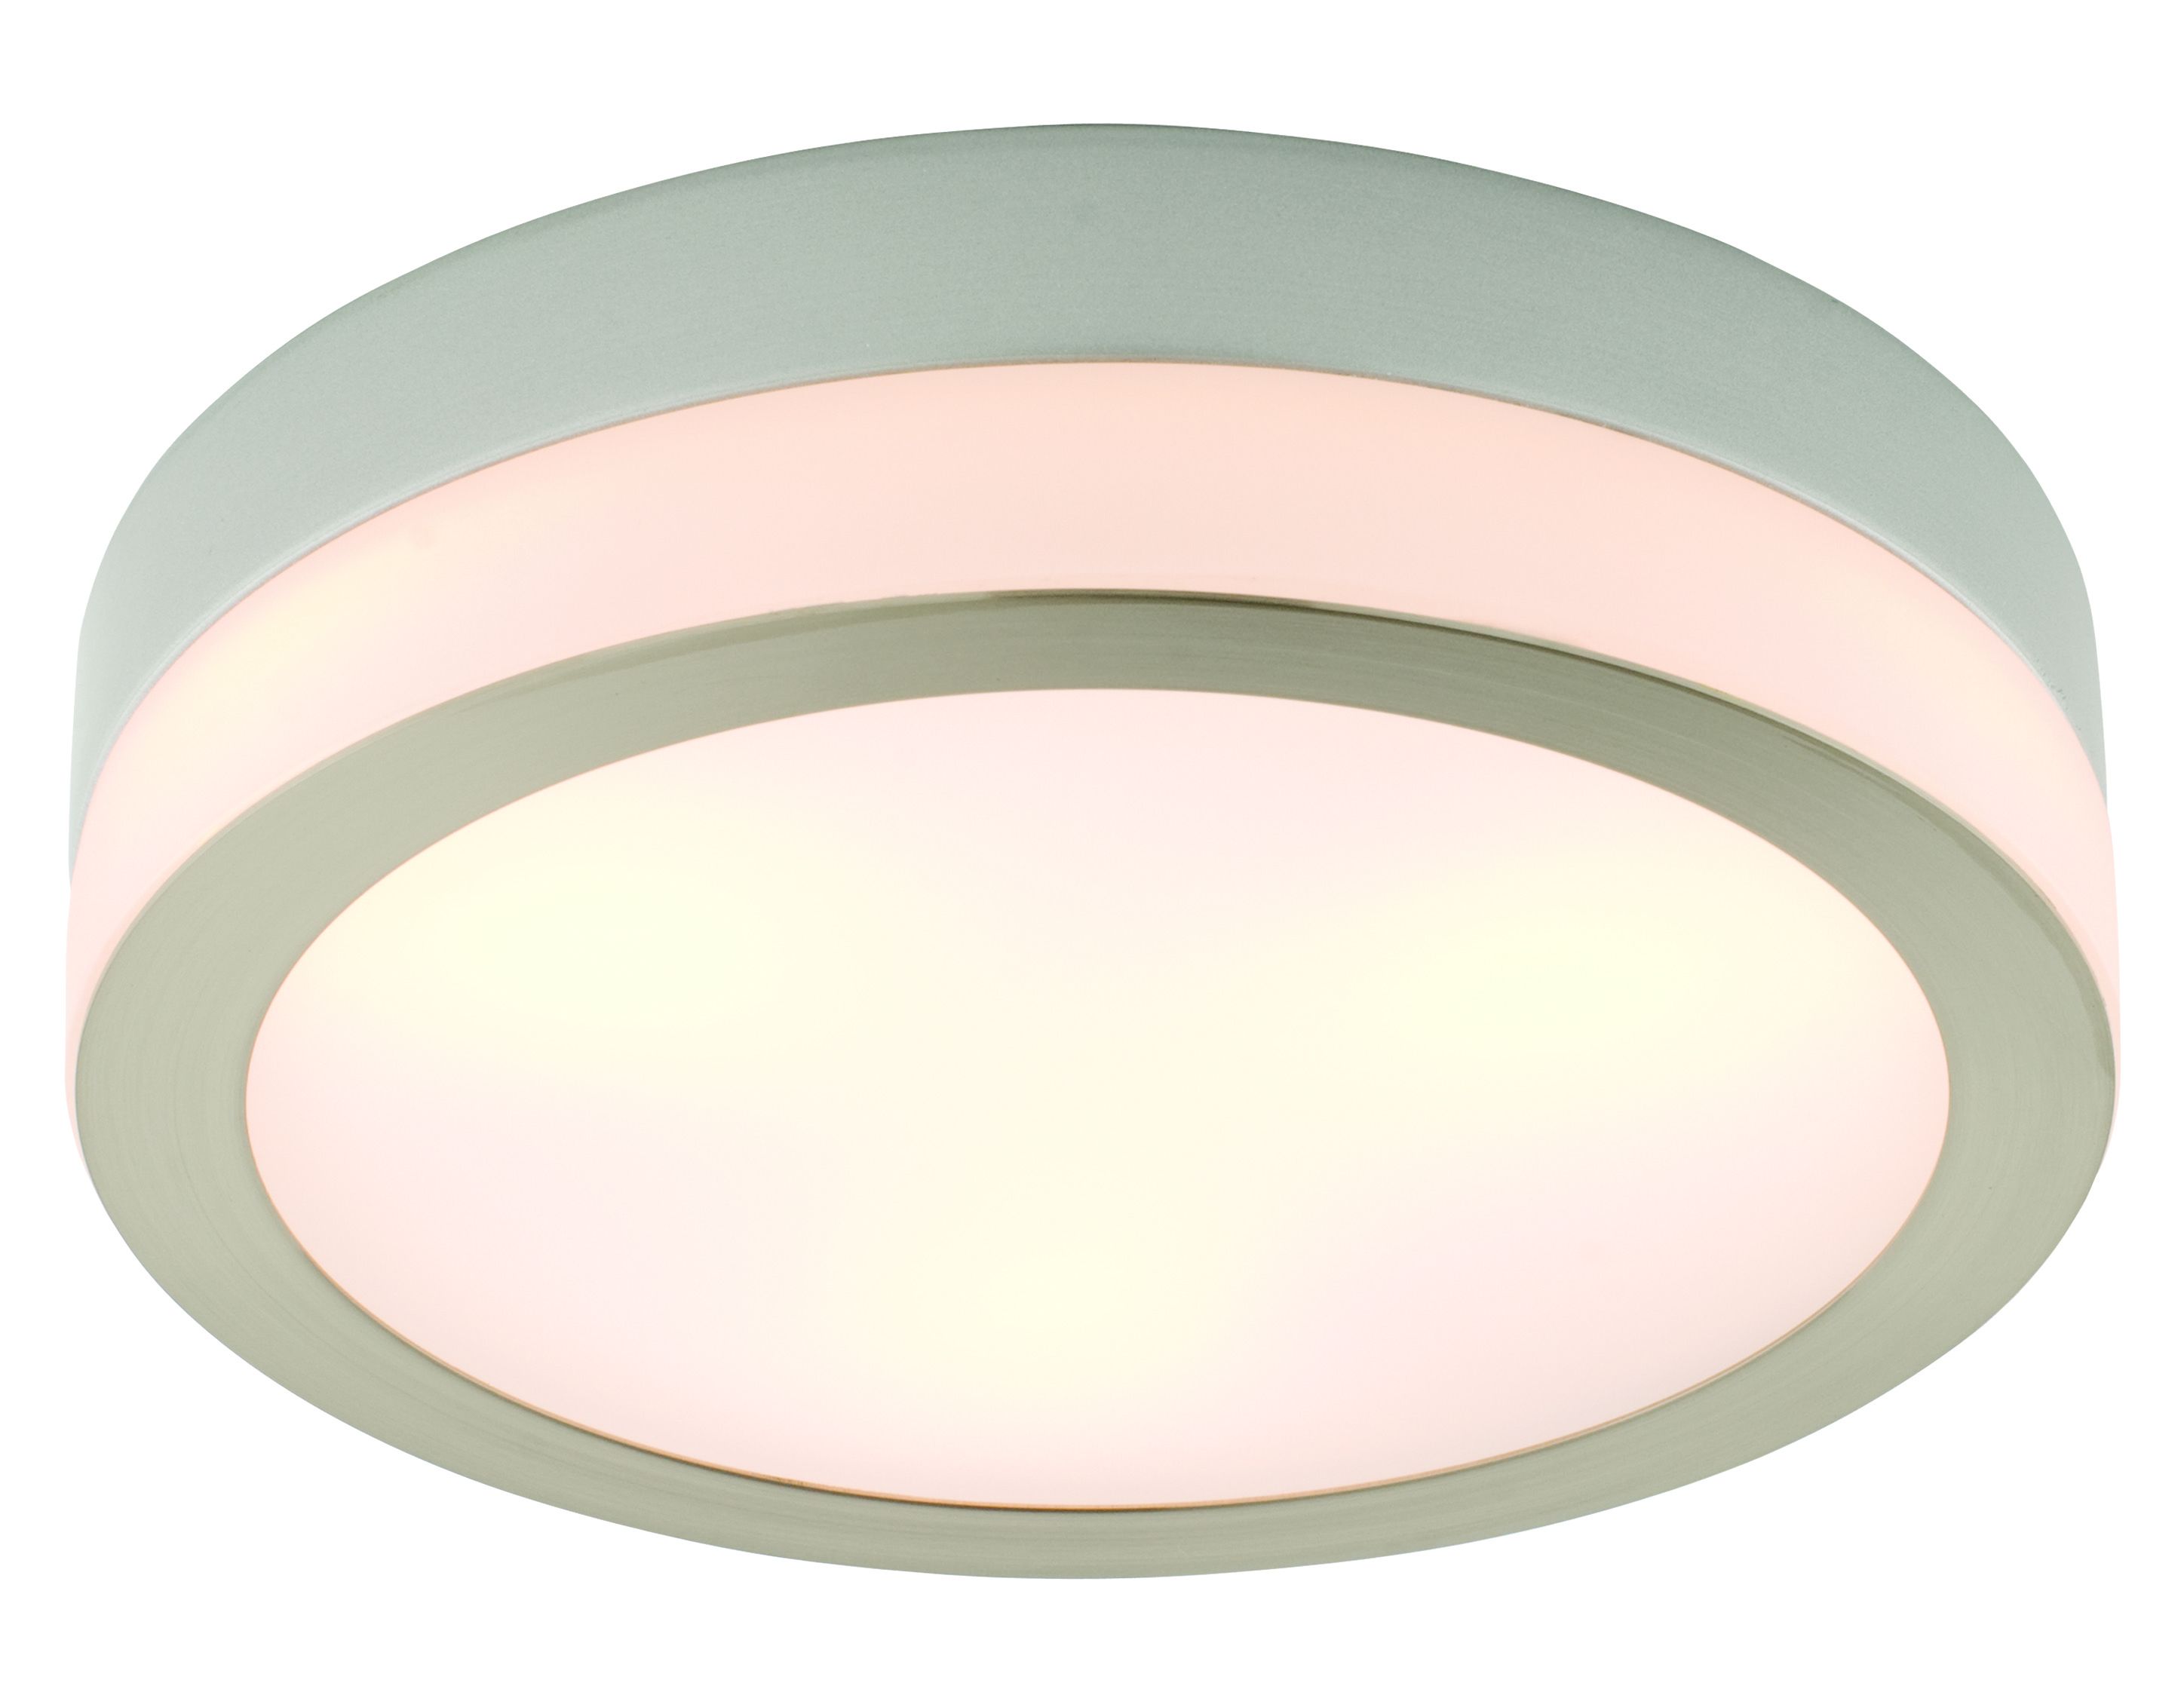 Laguna Chrome effect 3 Lamp Bathroom Ceiling light